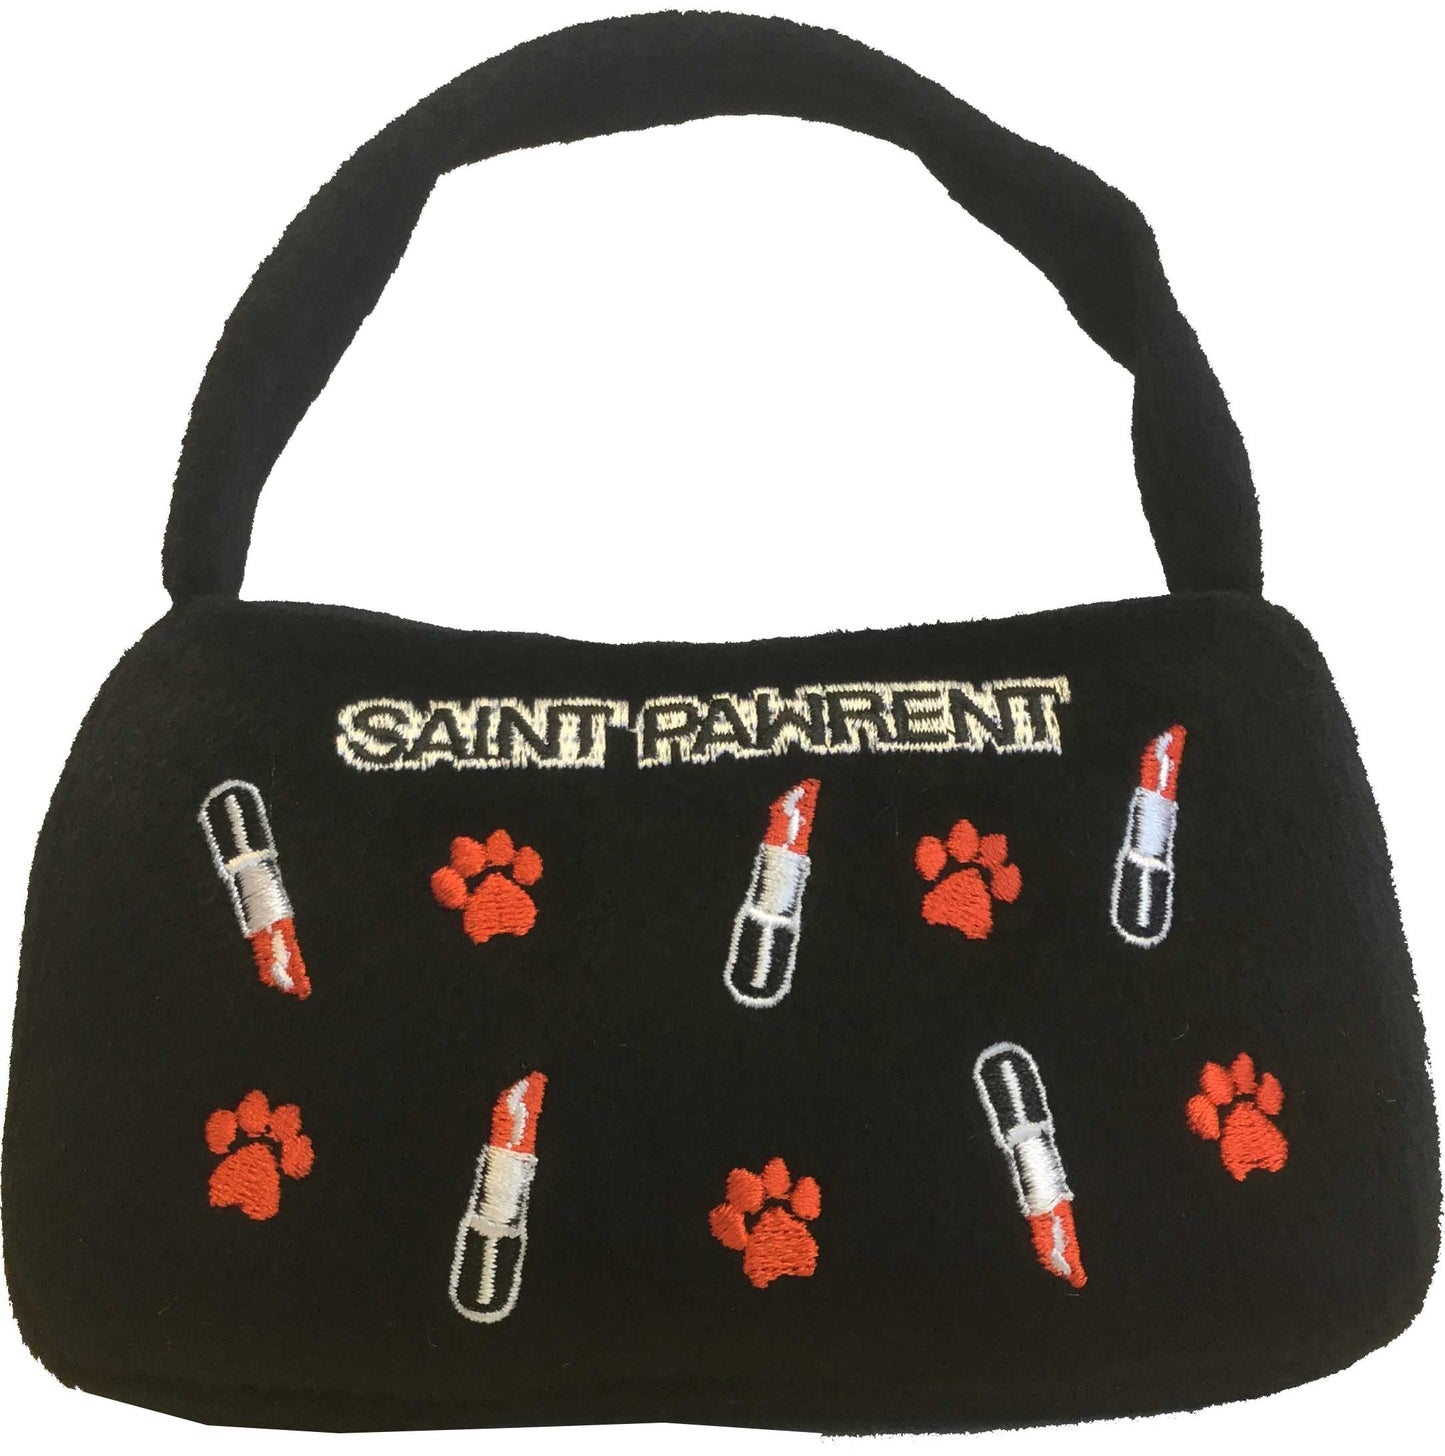 Saint Pawrent Lipstick Bag